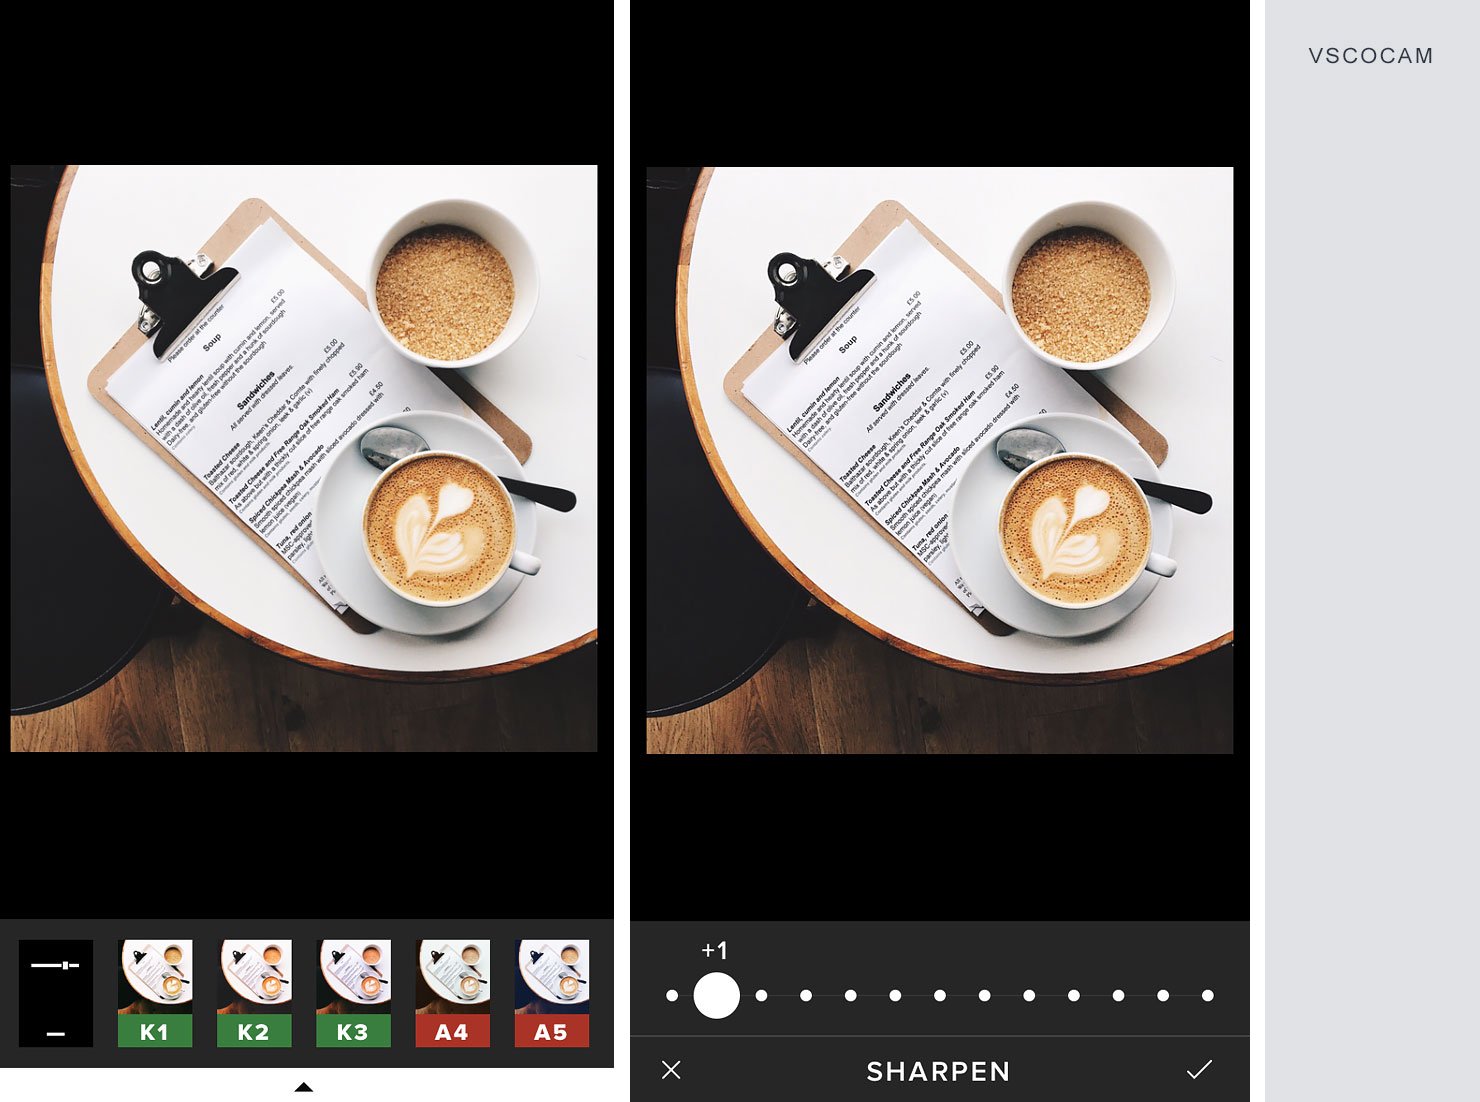 5 Steps and 5 Apps for better Instagram photos - Editing app VSCO cam